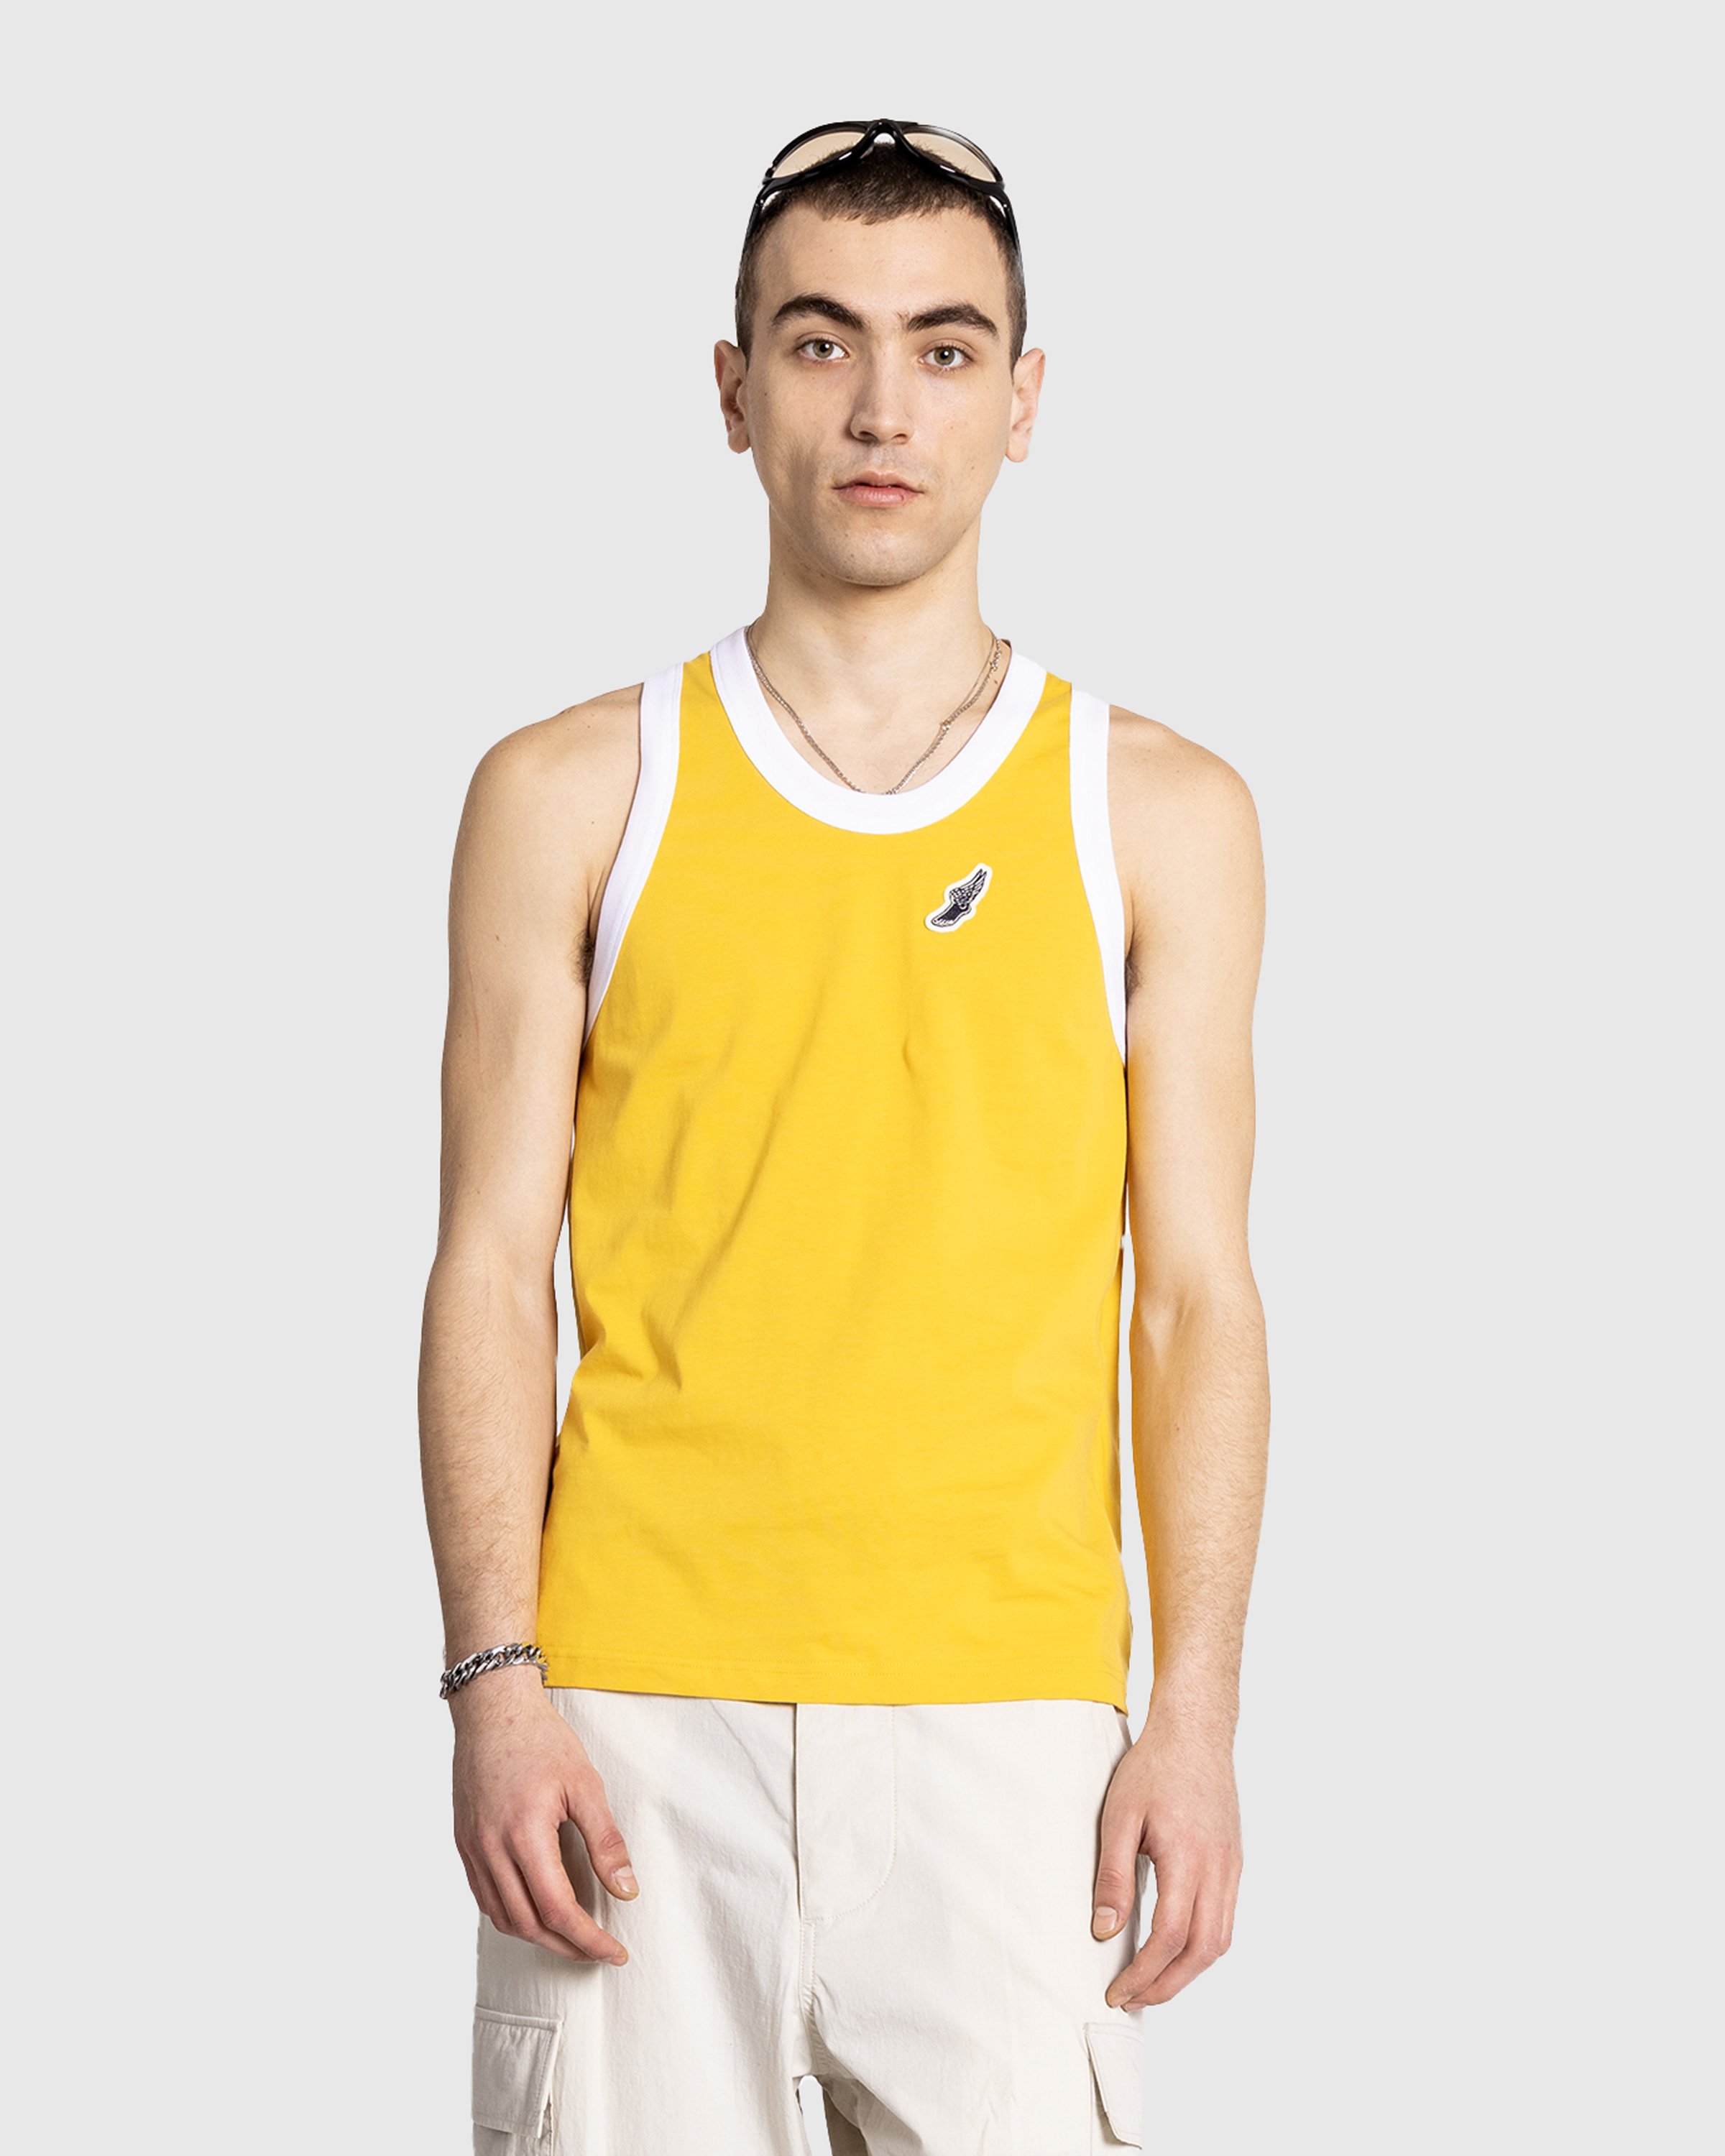 Wales Bonner - Plain T-Shirt Jersey Turmeric - Clothing - Yellow - Image 2